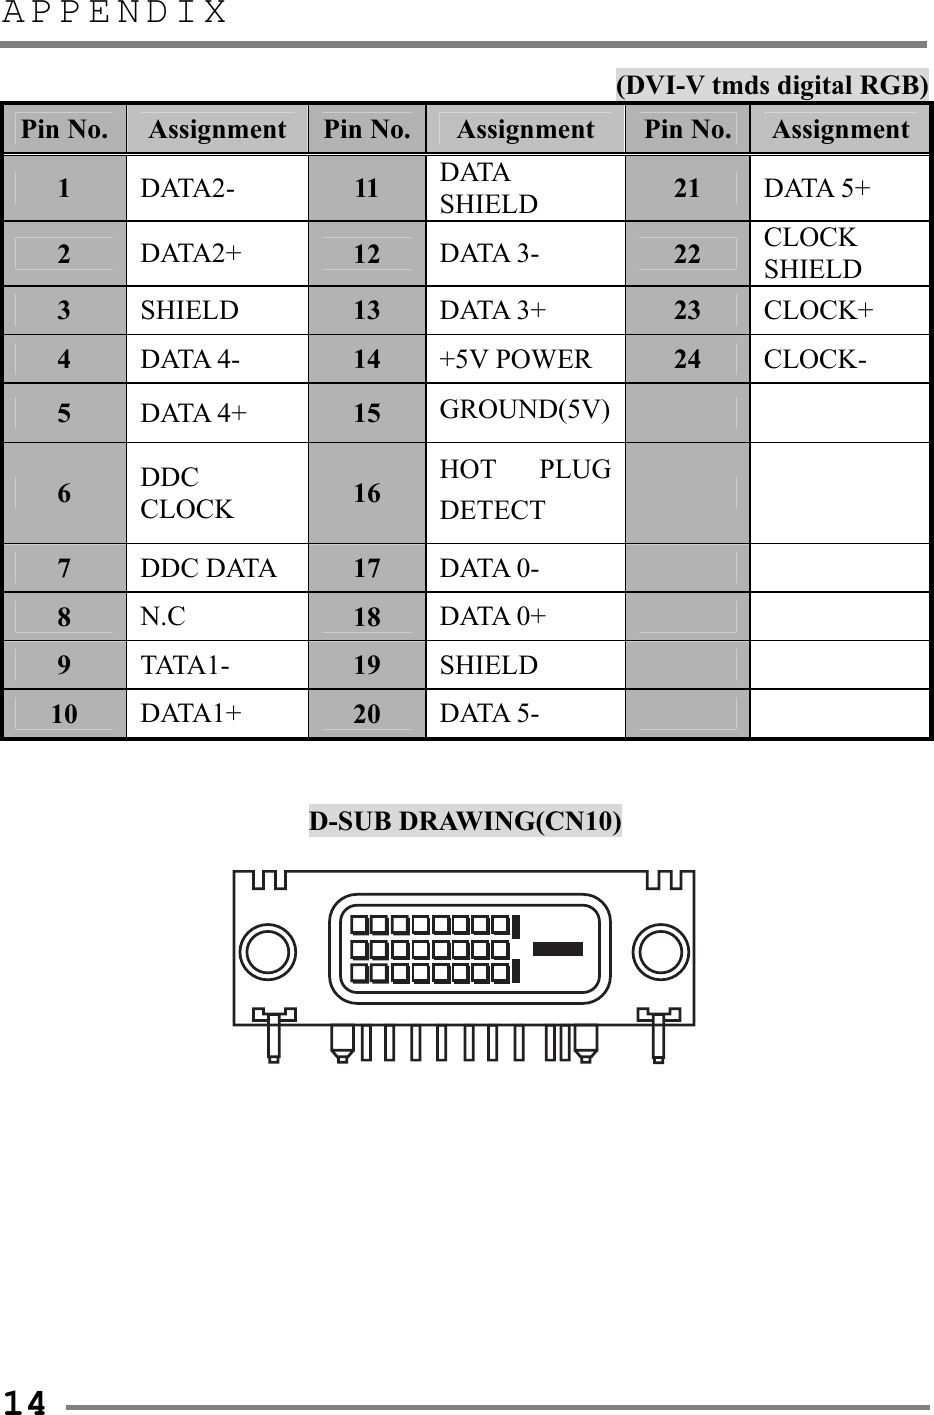 APPENDIX   14 (DVI-V tmds digital RGB) Pin No.  Assignment  Pin No. Assignment  Pin No.  Assignment1  DATA2-  11  DATA SHIELD  21  DATA 5+ 2  DATA2+  12  DATA 3-  22  CLOCK SHIELD 3  SHIELD  13  DATA 3+  23  CLOCK+ 4  DATA 4-  14  +5V POWER  24  CLOCK- 5  DATA 4+  15  GROUND(5V)   6  DDC CLOCK  16  HOT PLUG DETECT    7  DDC DATA  17  DATA 0-    8  N.C  18  DATA 0+    9  TATA1-  19  SHIELD    10  DATA1+  20  DATA 5-      D-SUB DRAWING(CN10)           